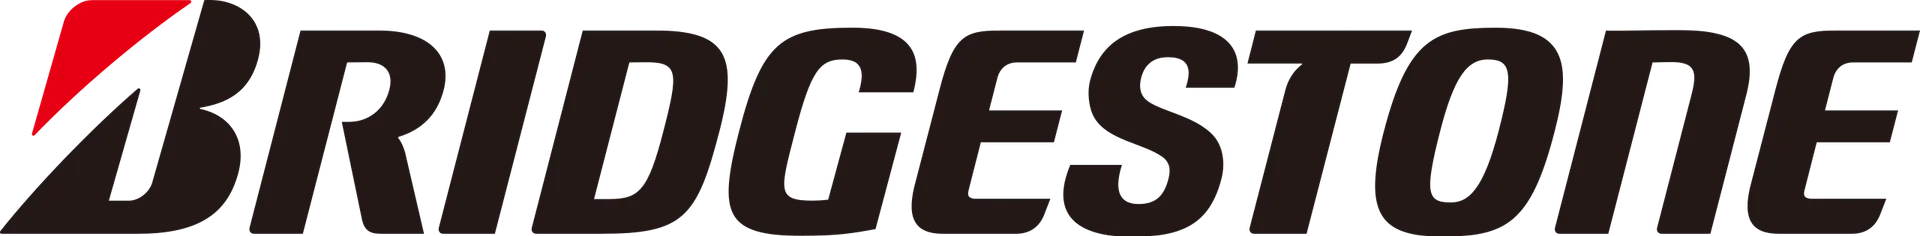 BRIDGESTONE logo die aktuell Flugblatt